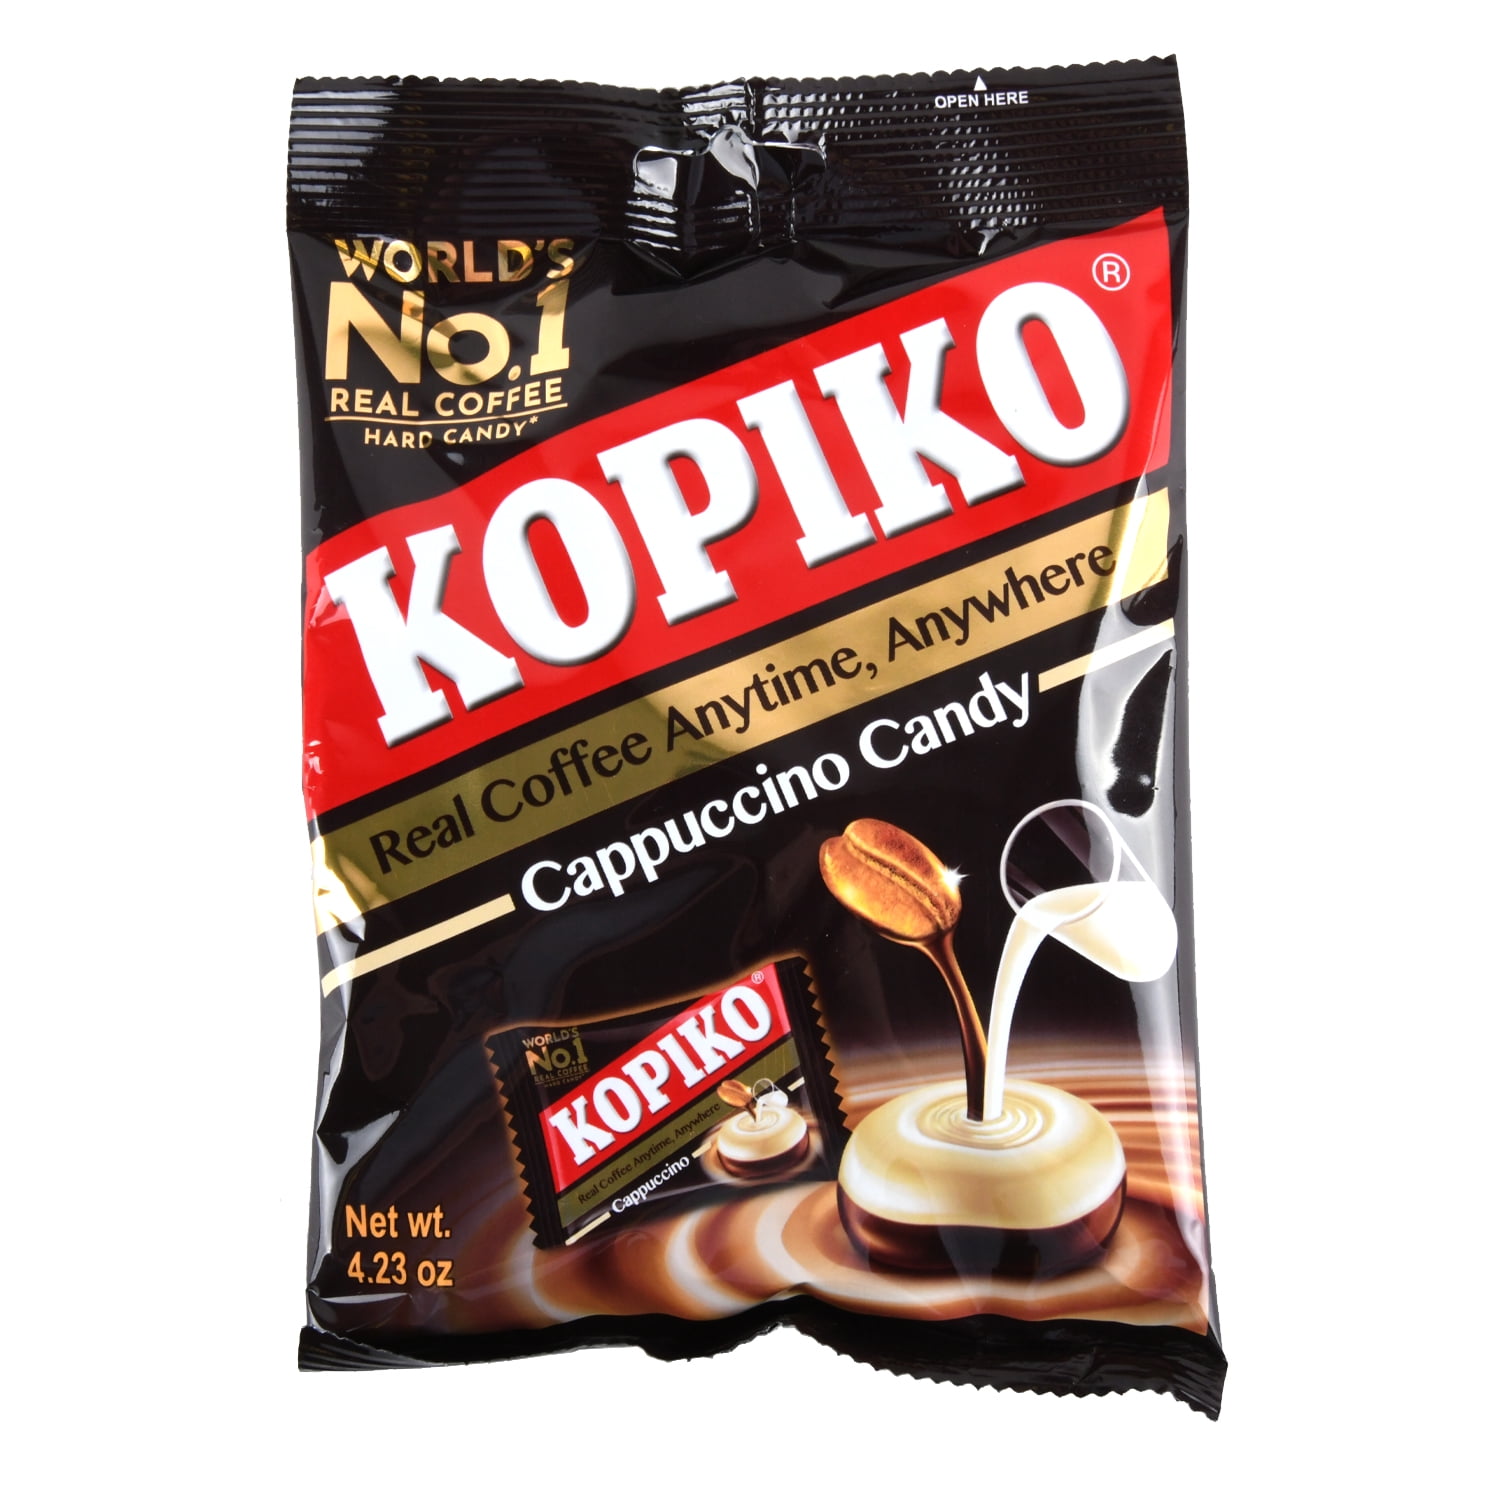 Kopiko Cappuccino Coffee Candy 4.23 oz. Bag (1 Pack)